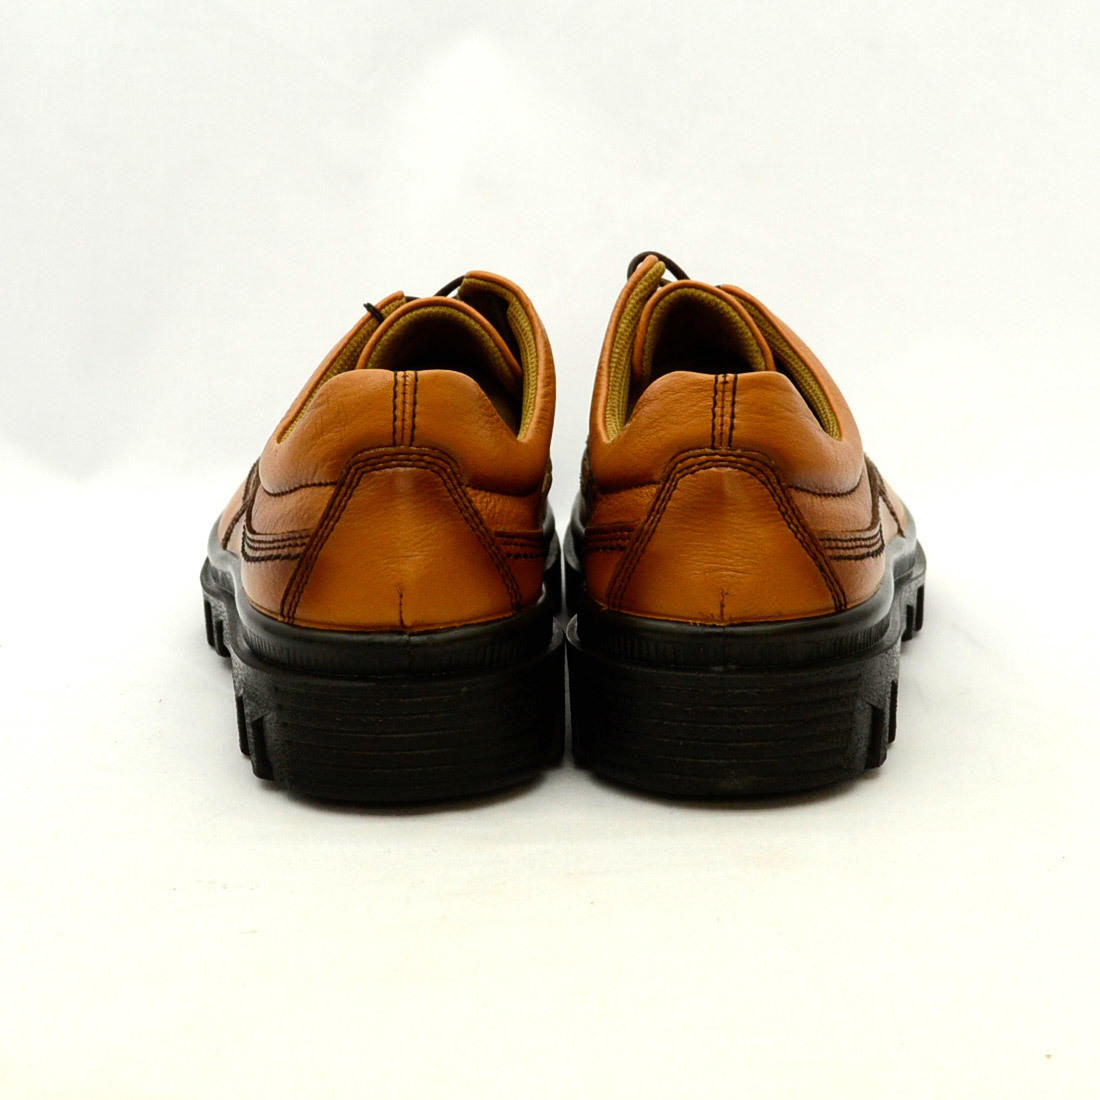 ^BOBSON Bobson casual shoes walking wide width 3E 4355 navy Brown NavyBrown navy blue tea 25.5cm (0910010284-nb-s255)